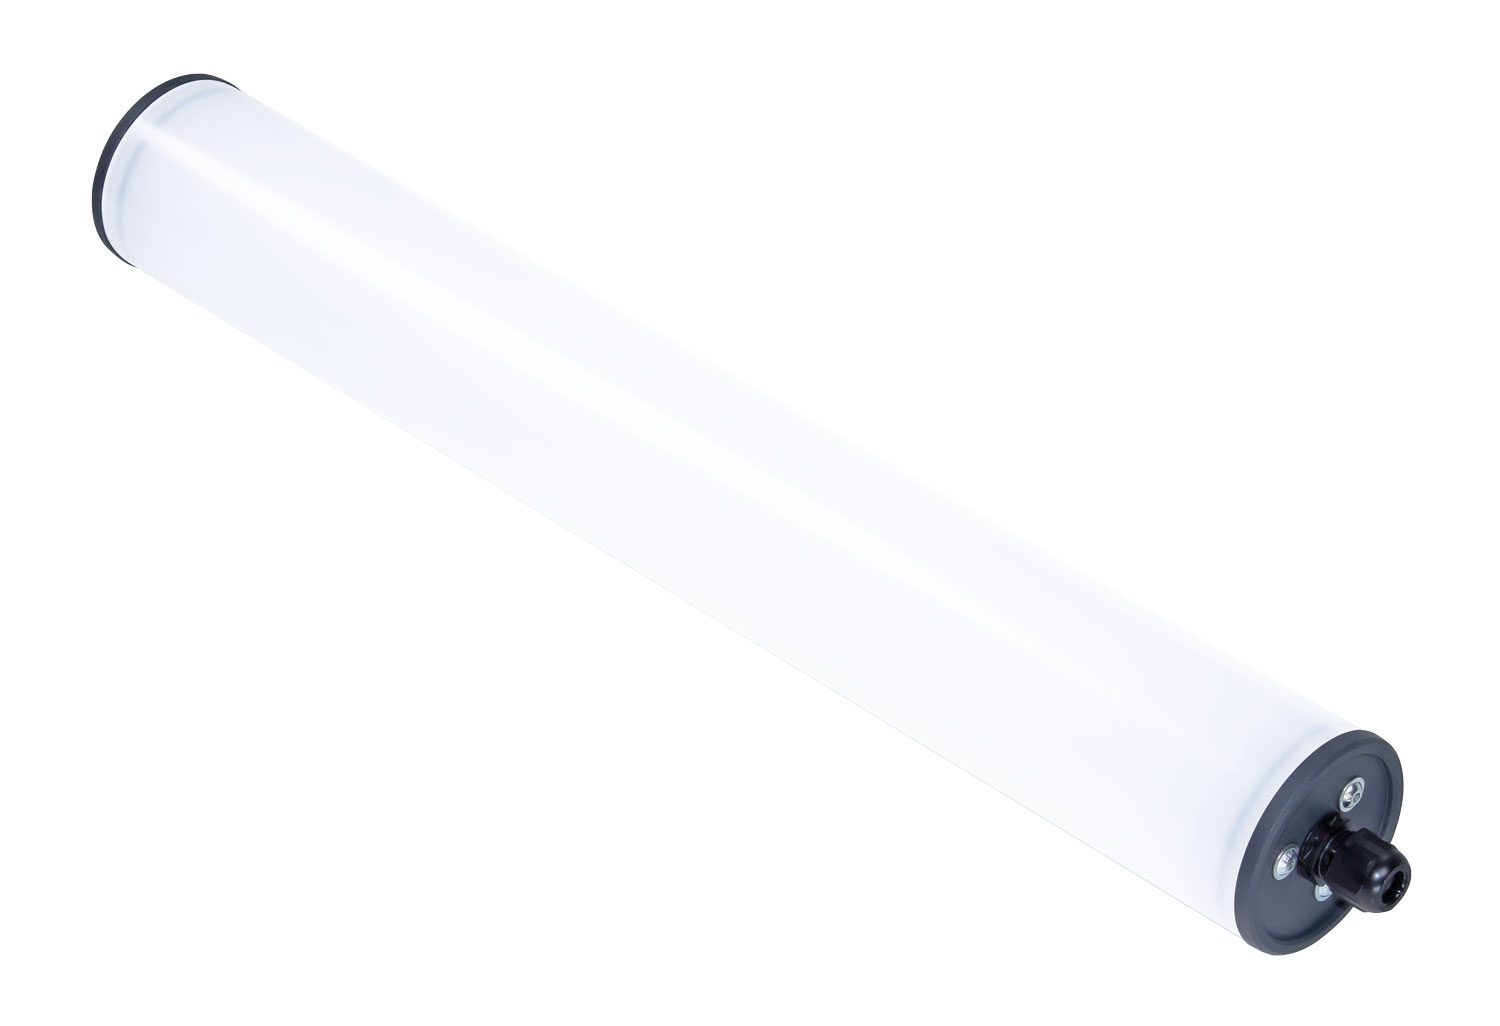 Mona Lisa houding Forensische geneeskunde Werkbanklamp LED2WORK bij Flume technology | Model Opbouwbuislamp INROLED  70 AC ECO, beschermbuis borosilicaat, 125°, 921 mm, 220-240V AC